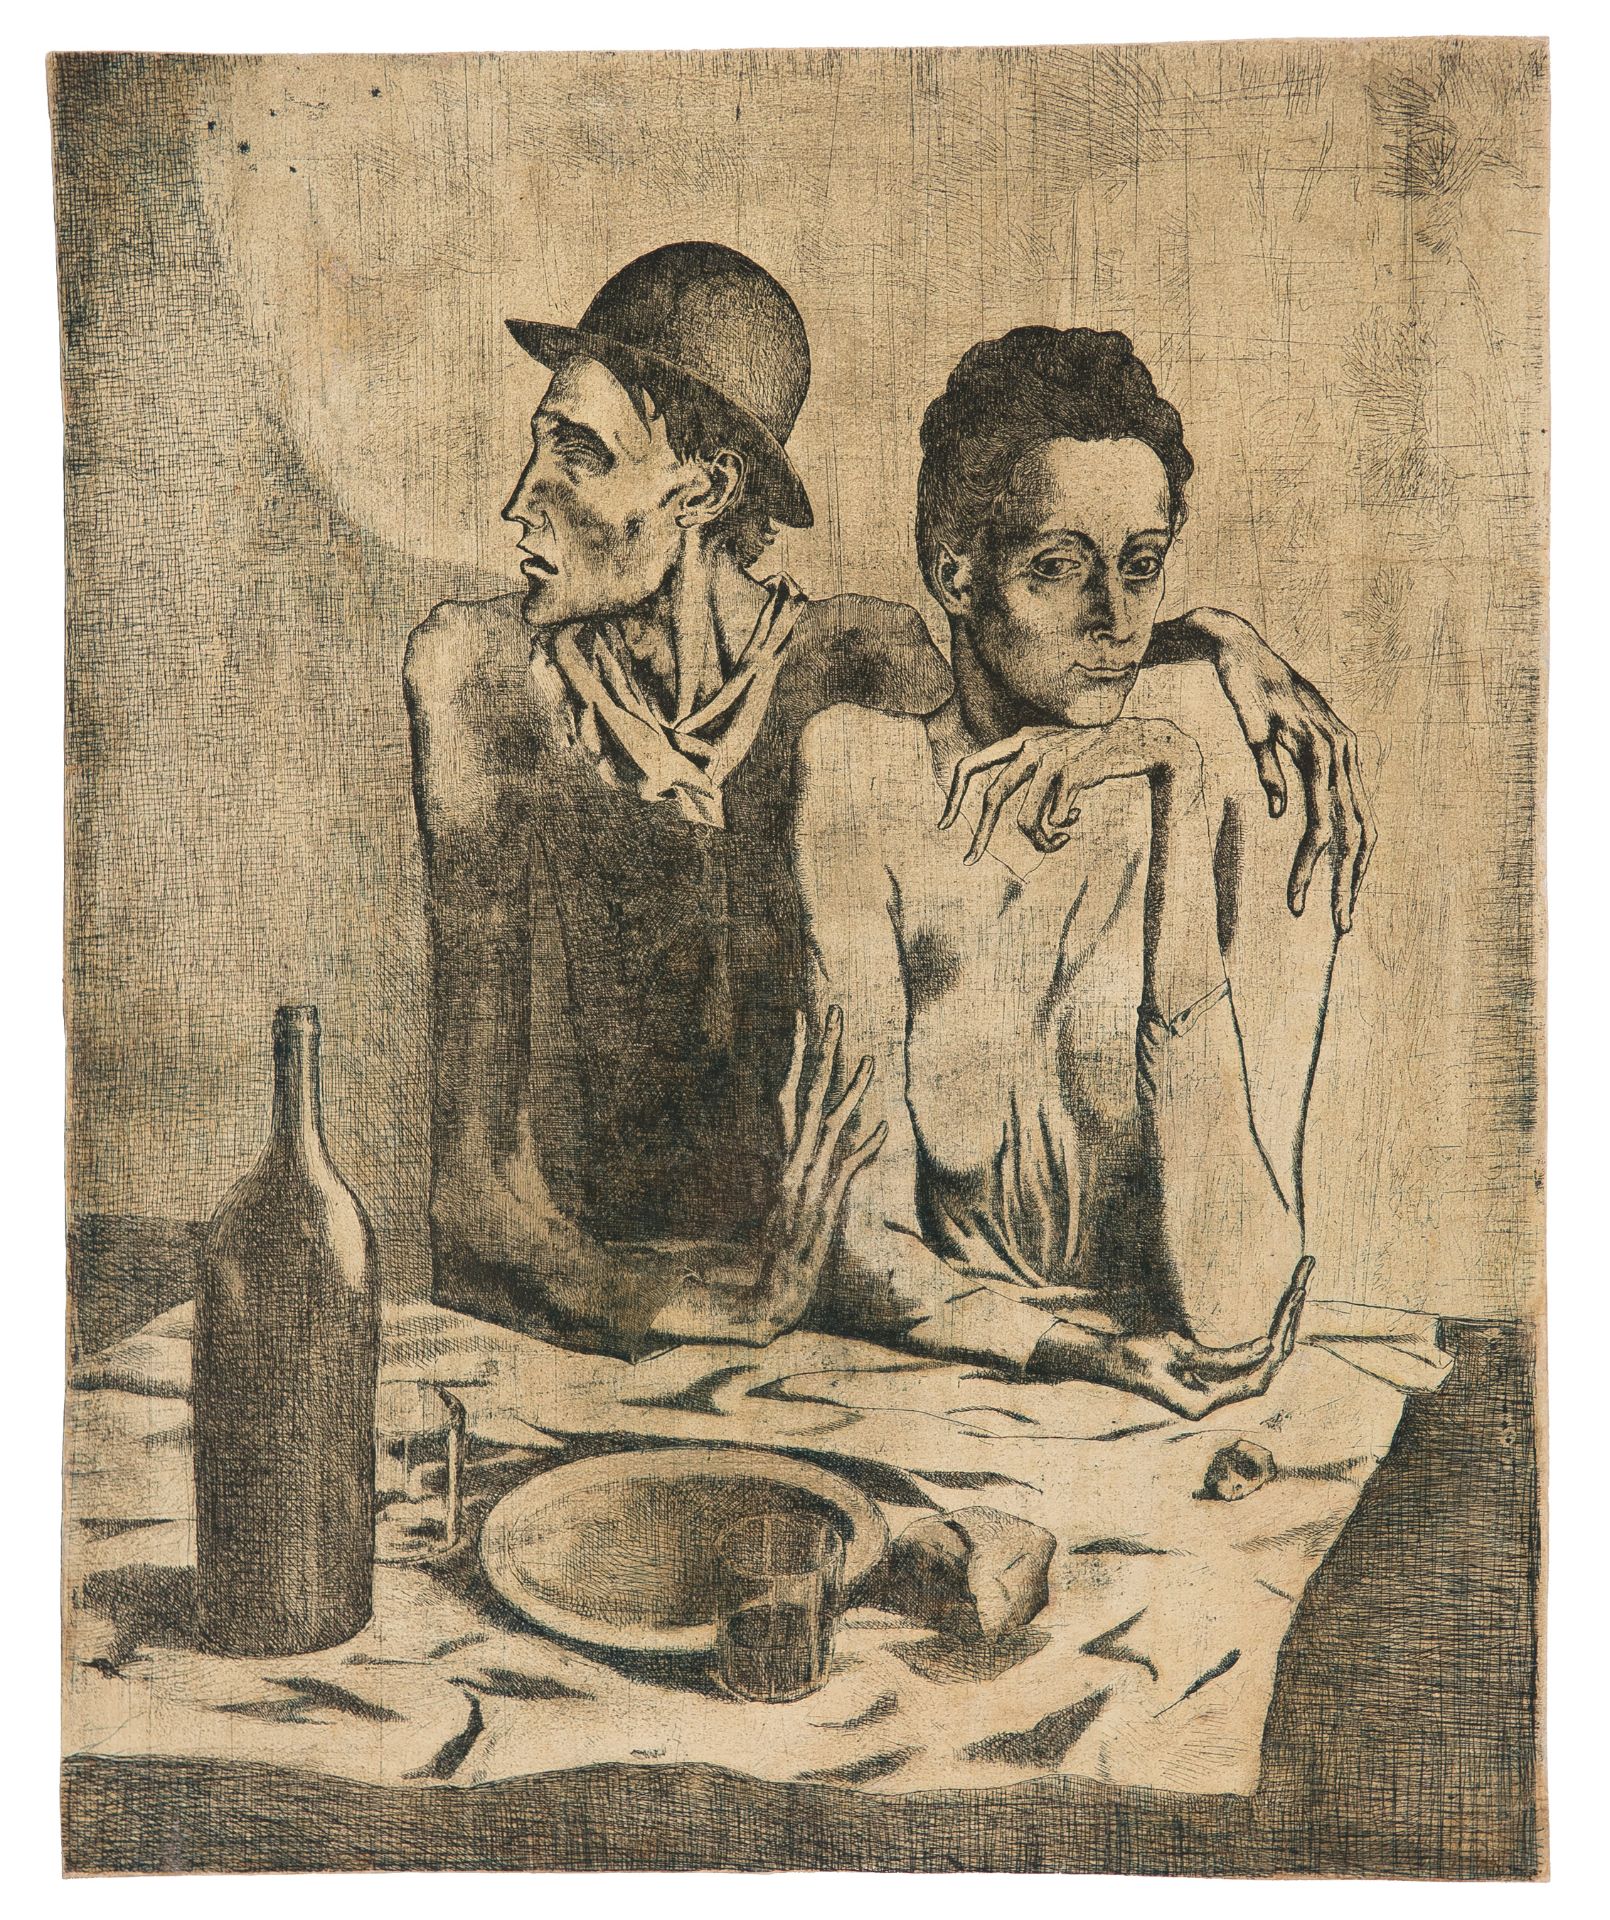 Pablo Ruiz Picasso (Malaga, 1881 - Mougins, 1973)